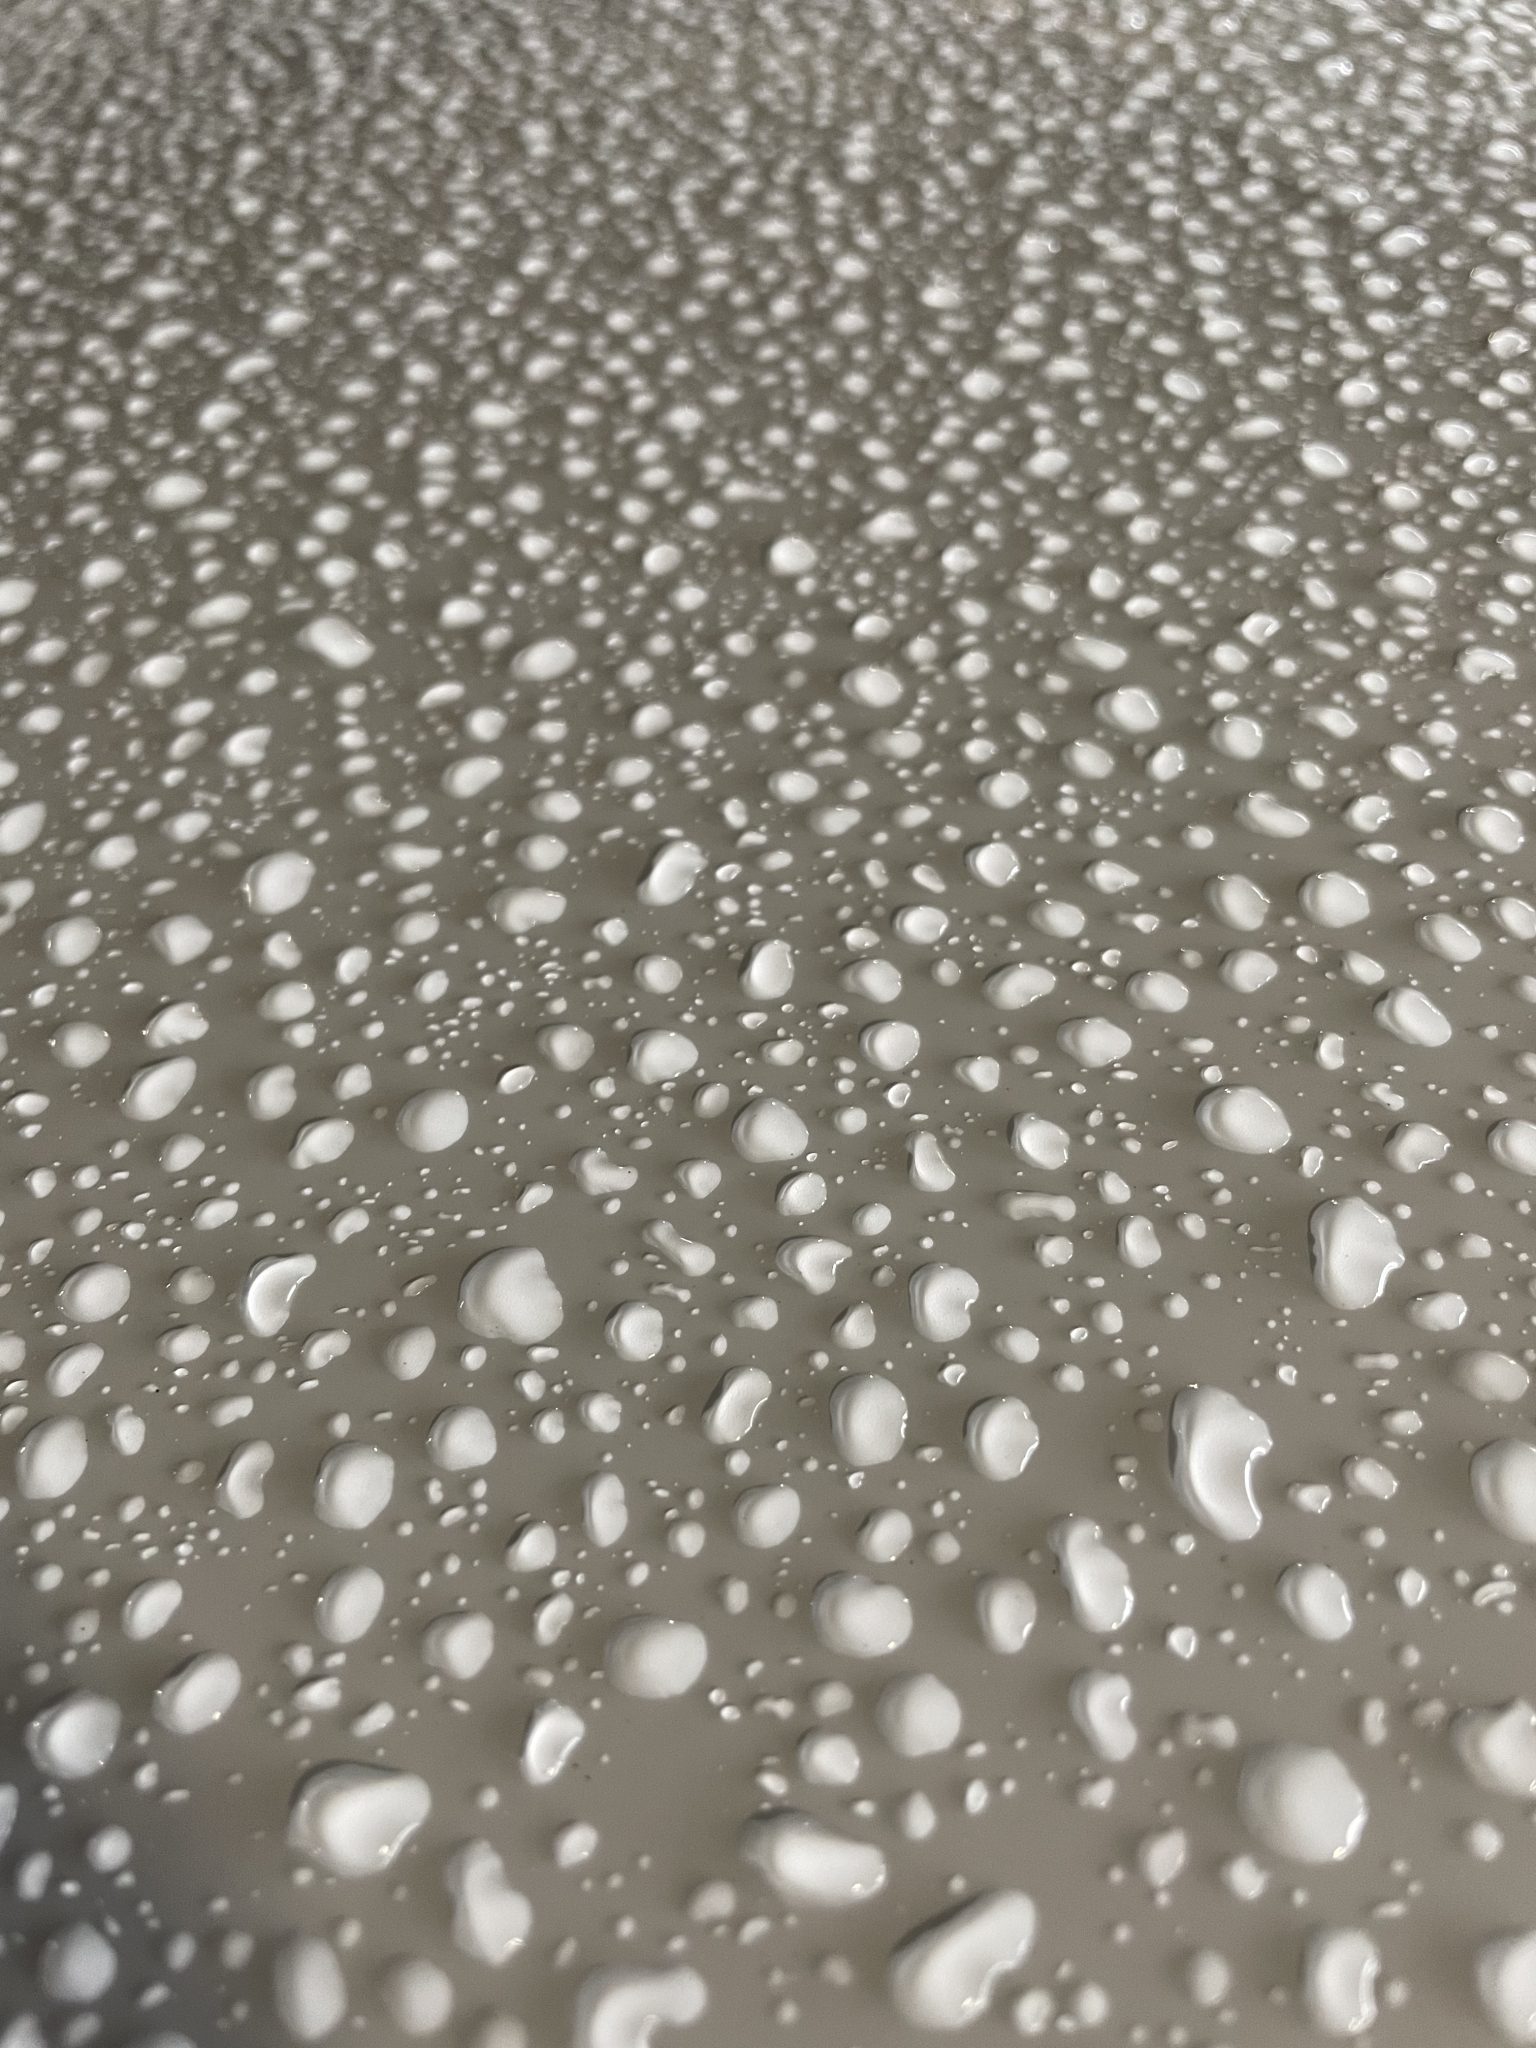 Waterdrops on a car hood